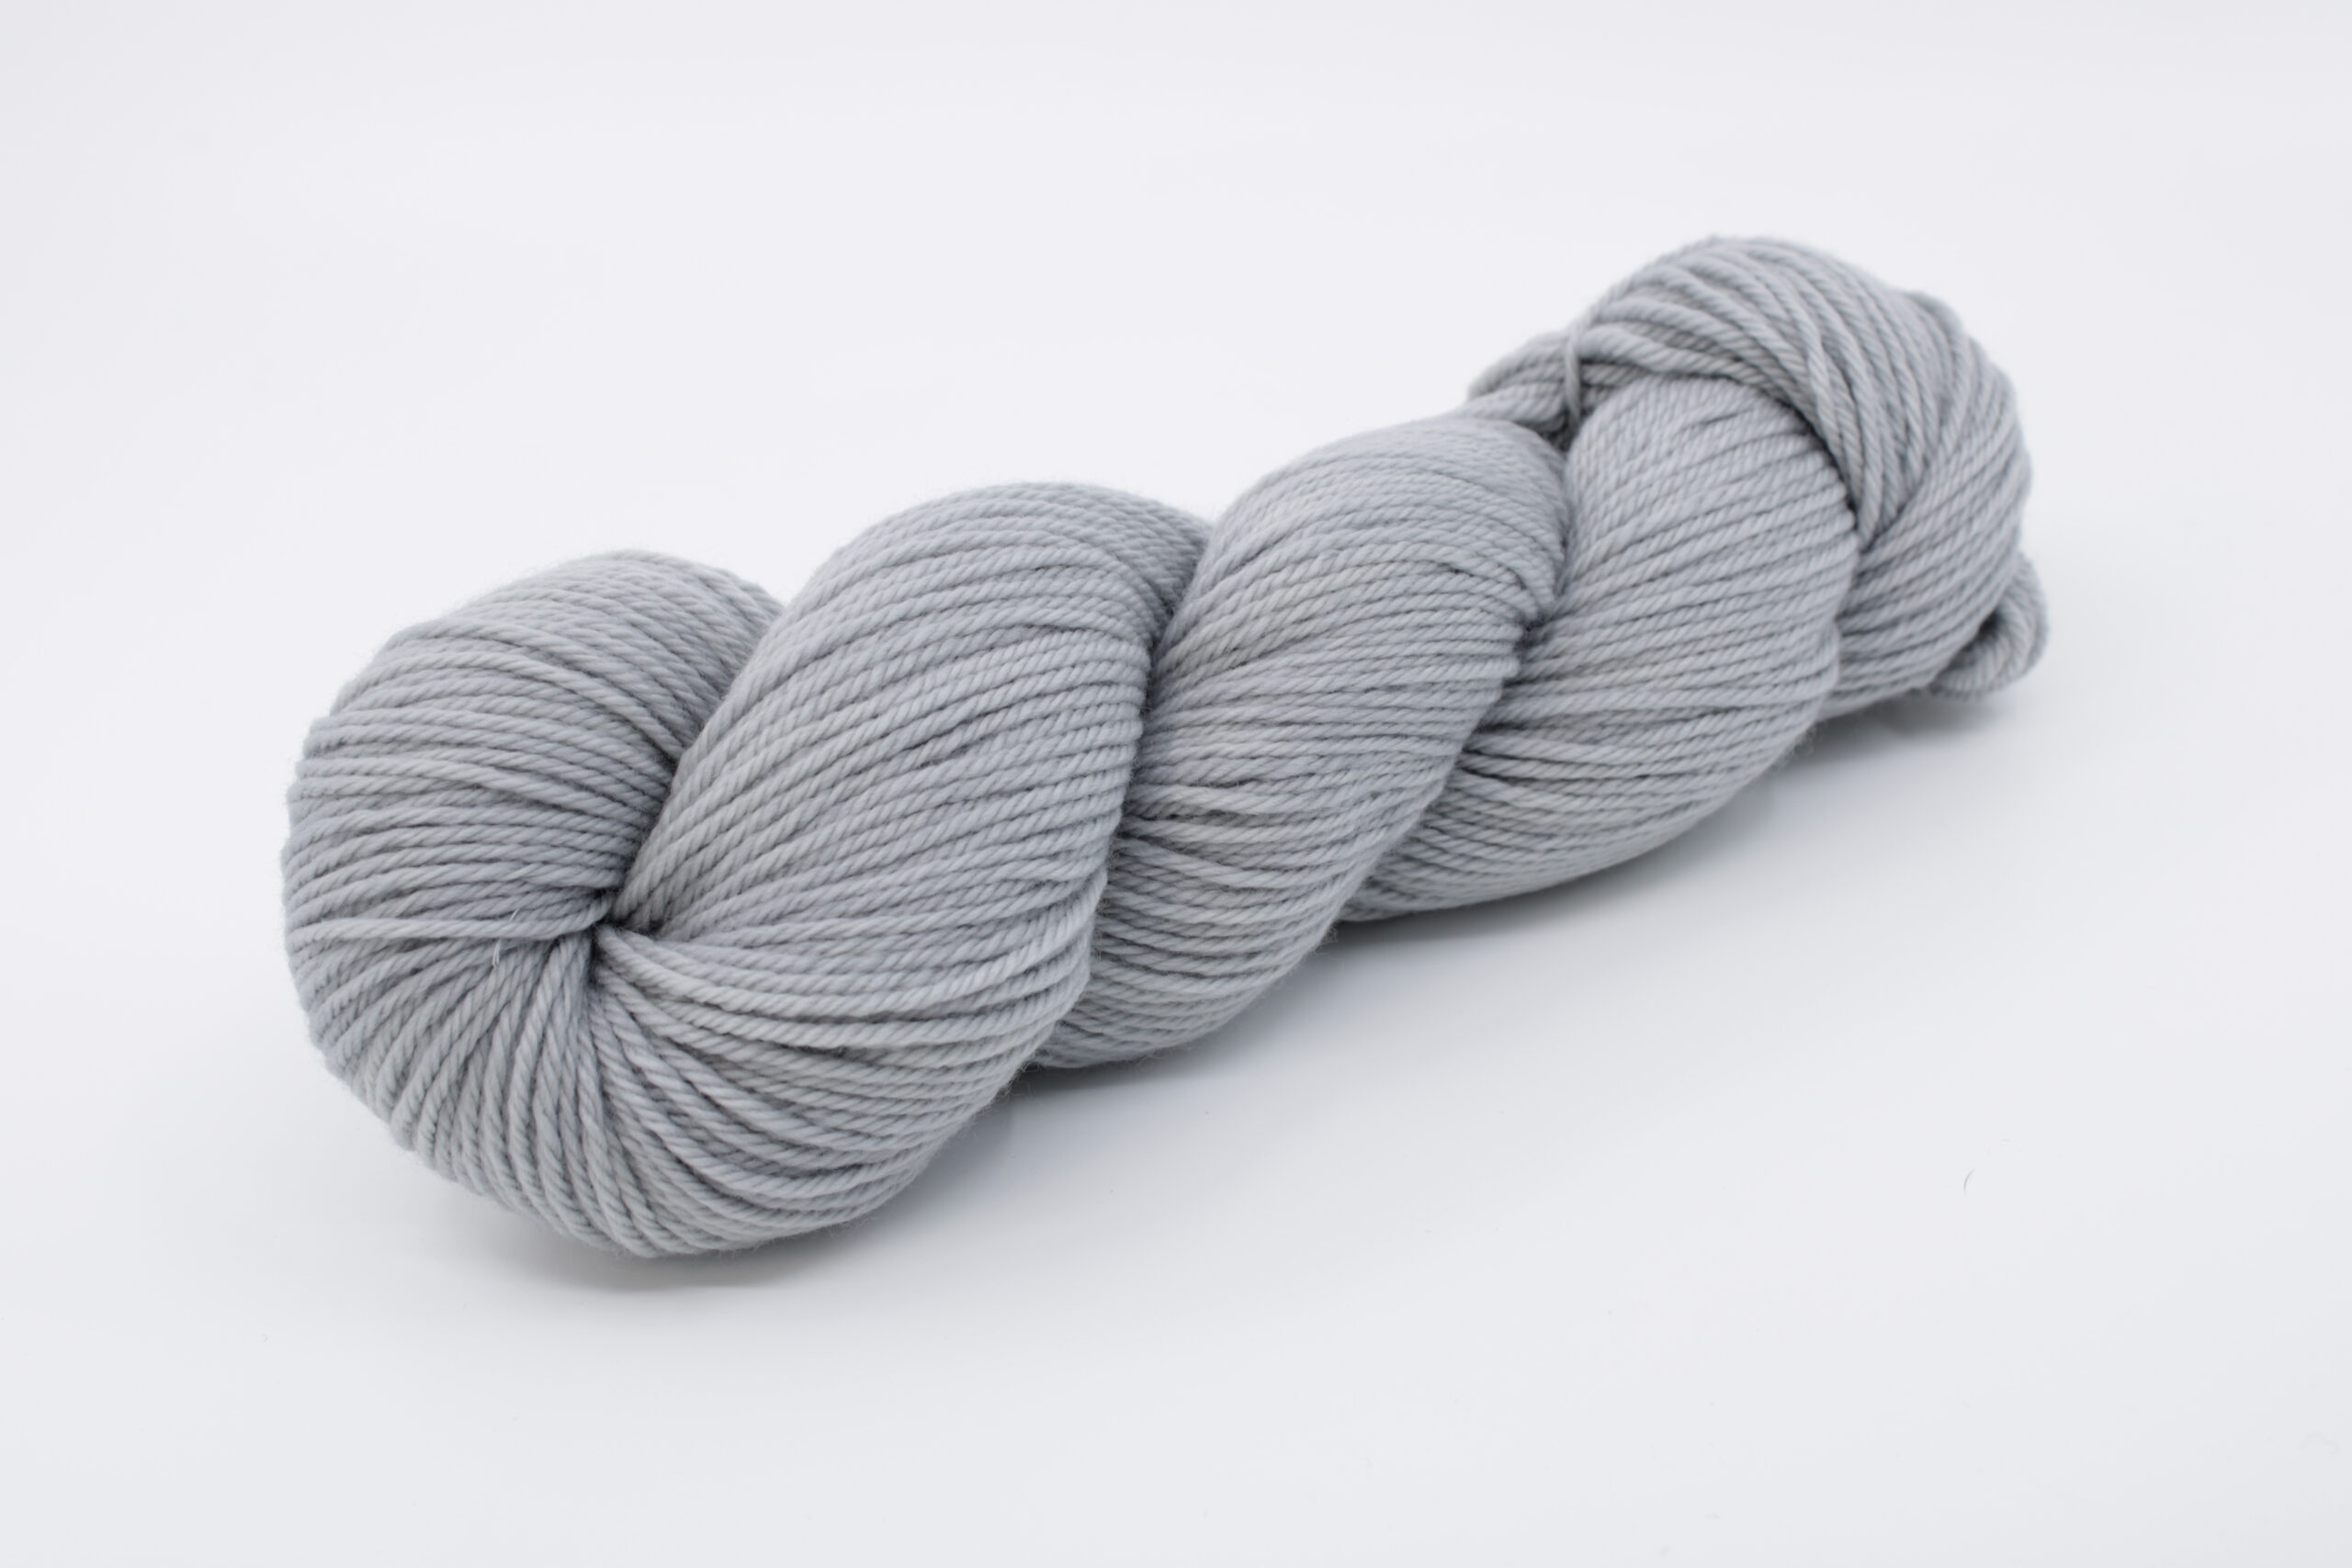 Fibrani wool, base: Flocon DK. Wool 100% merino untreated.gray color. Color: Langur.